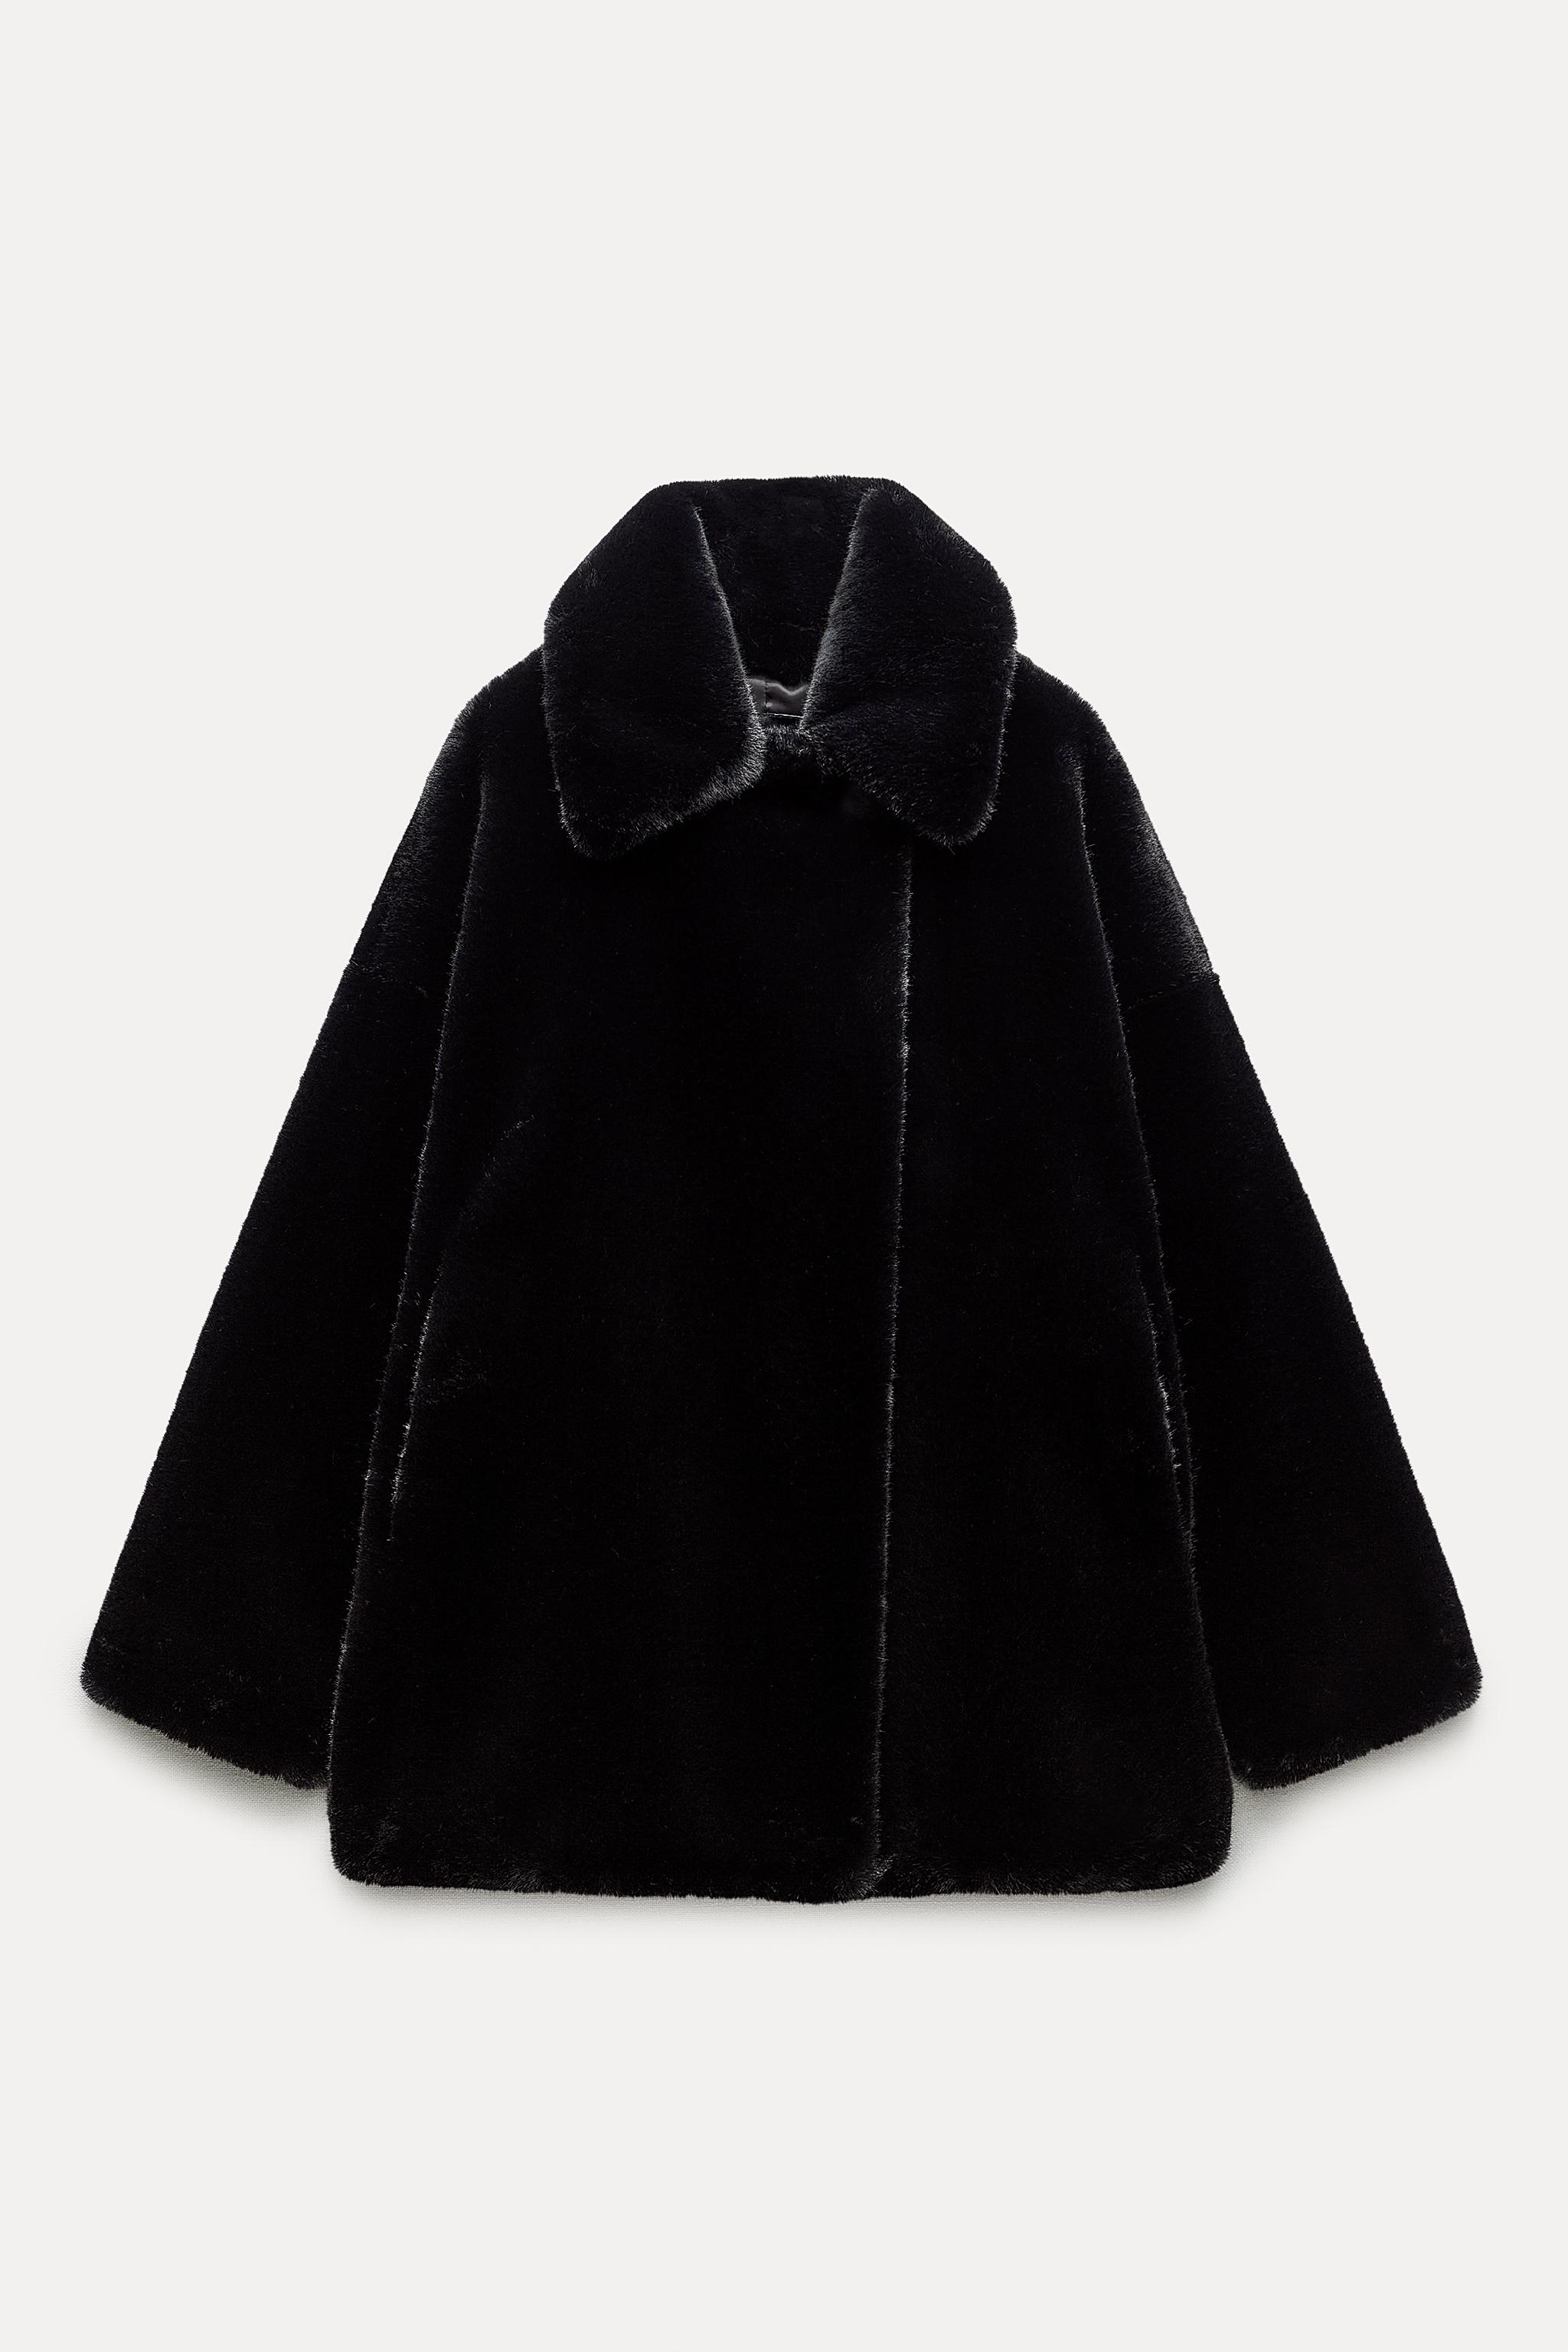 Zara, Jackets & Coats, Bloggers Fave Zara Faux Fur Coat Limited Edition  Mink Nwt